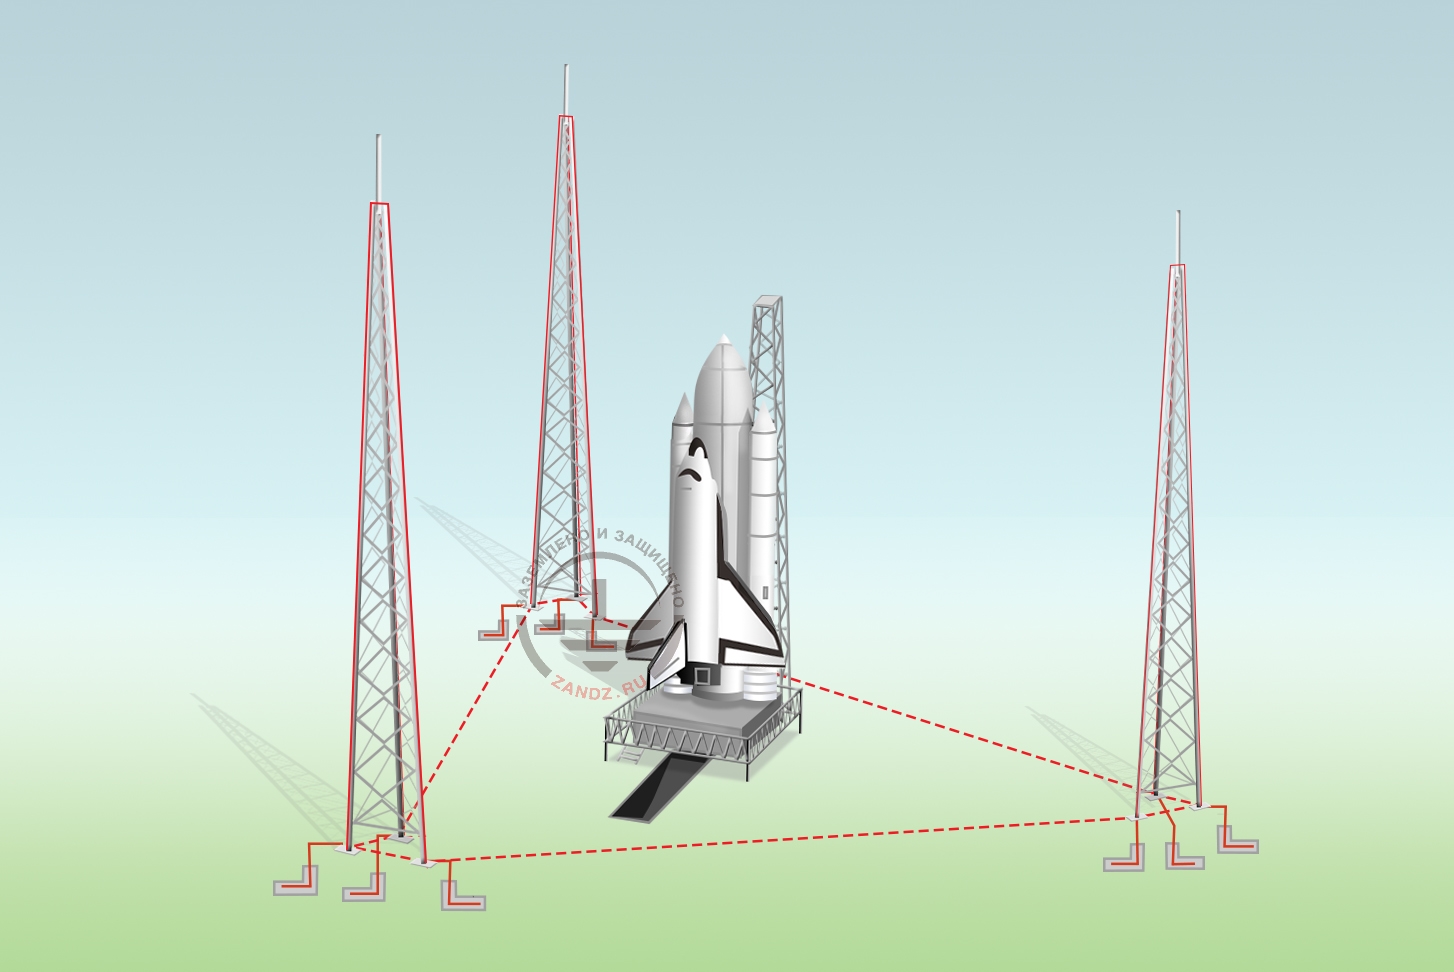 Rod lightning masts mounted on towers